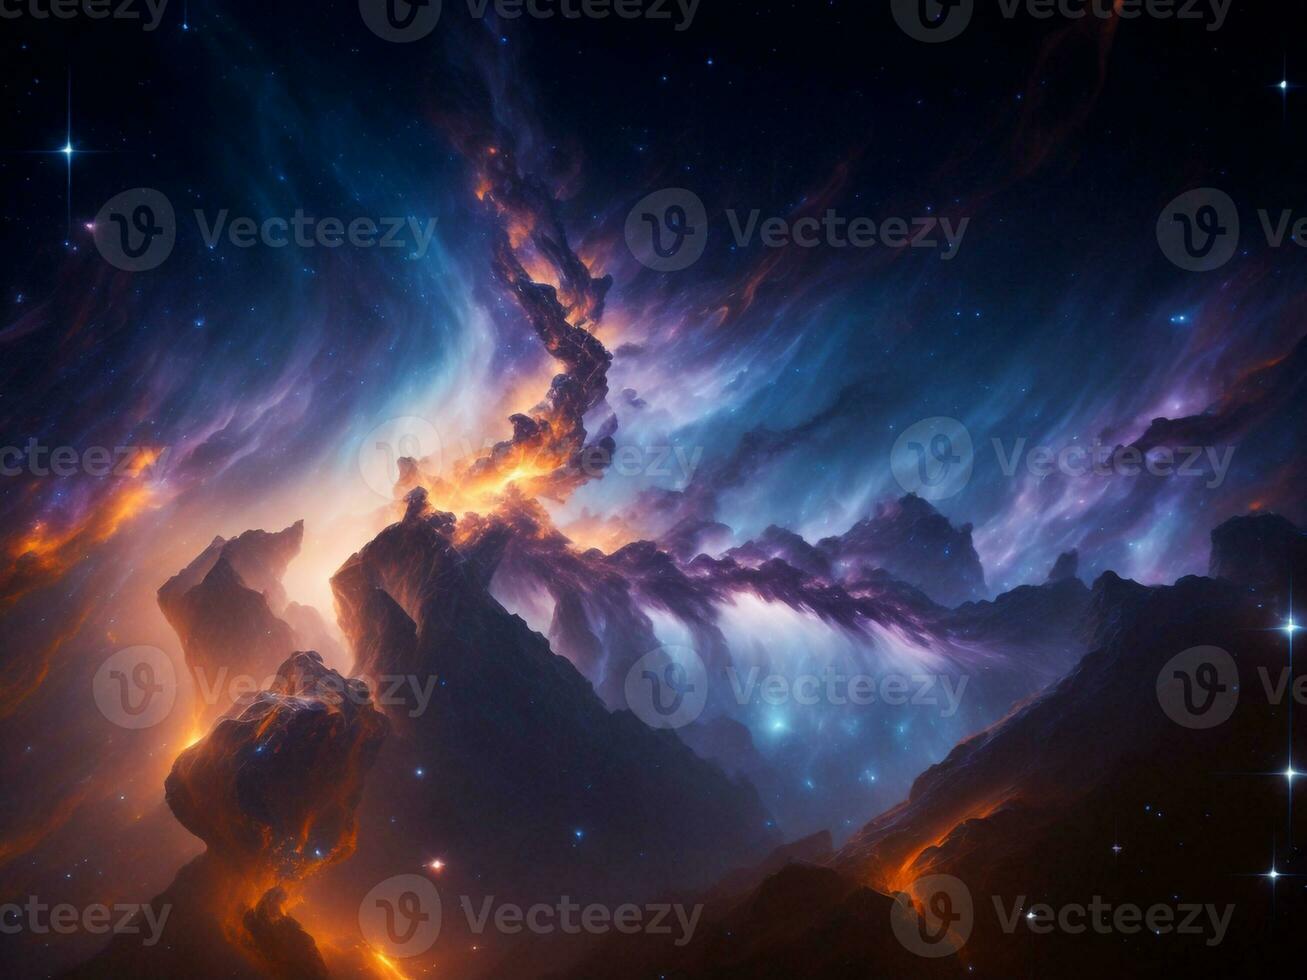 Celestial Wonders Majestic Beauty of a Vast Galaxy-Filled Sky Illuminated by Stars, Ai Generative photo